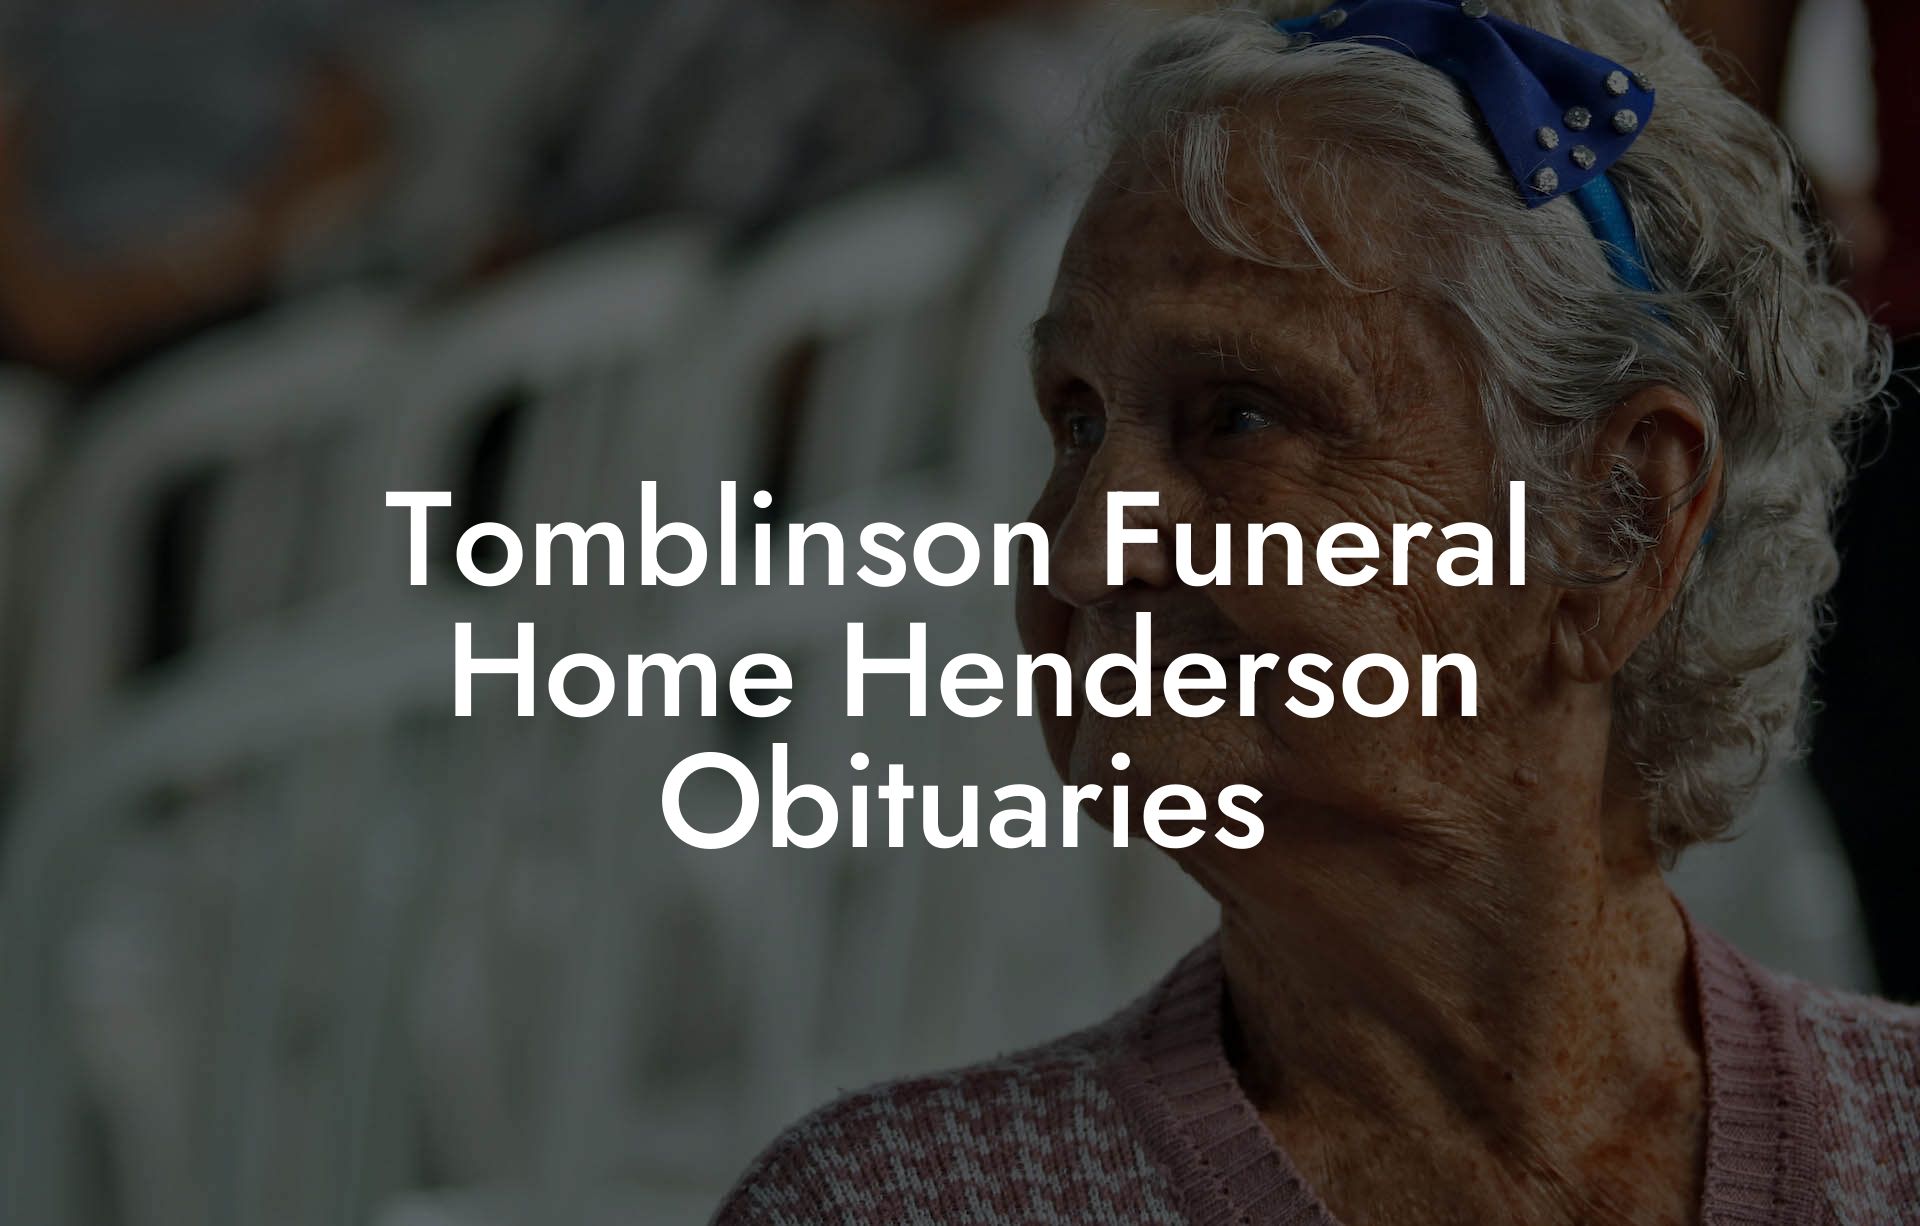 Tomblinson Funeral Home Henderson Obituaries